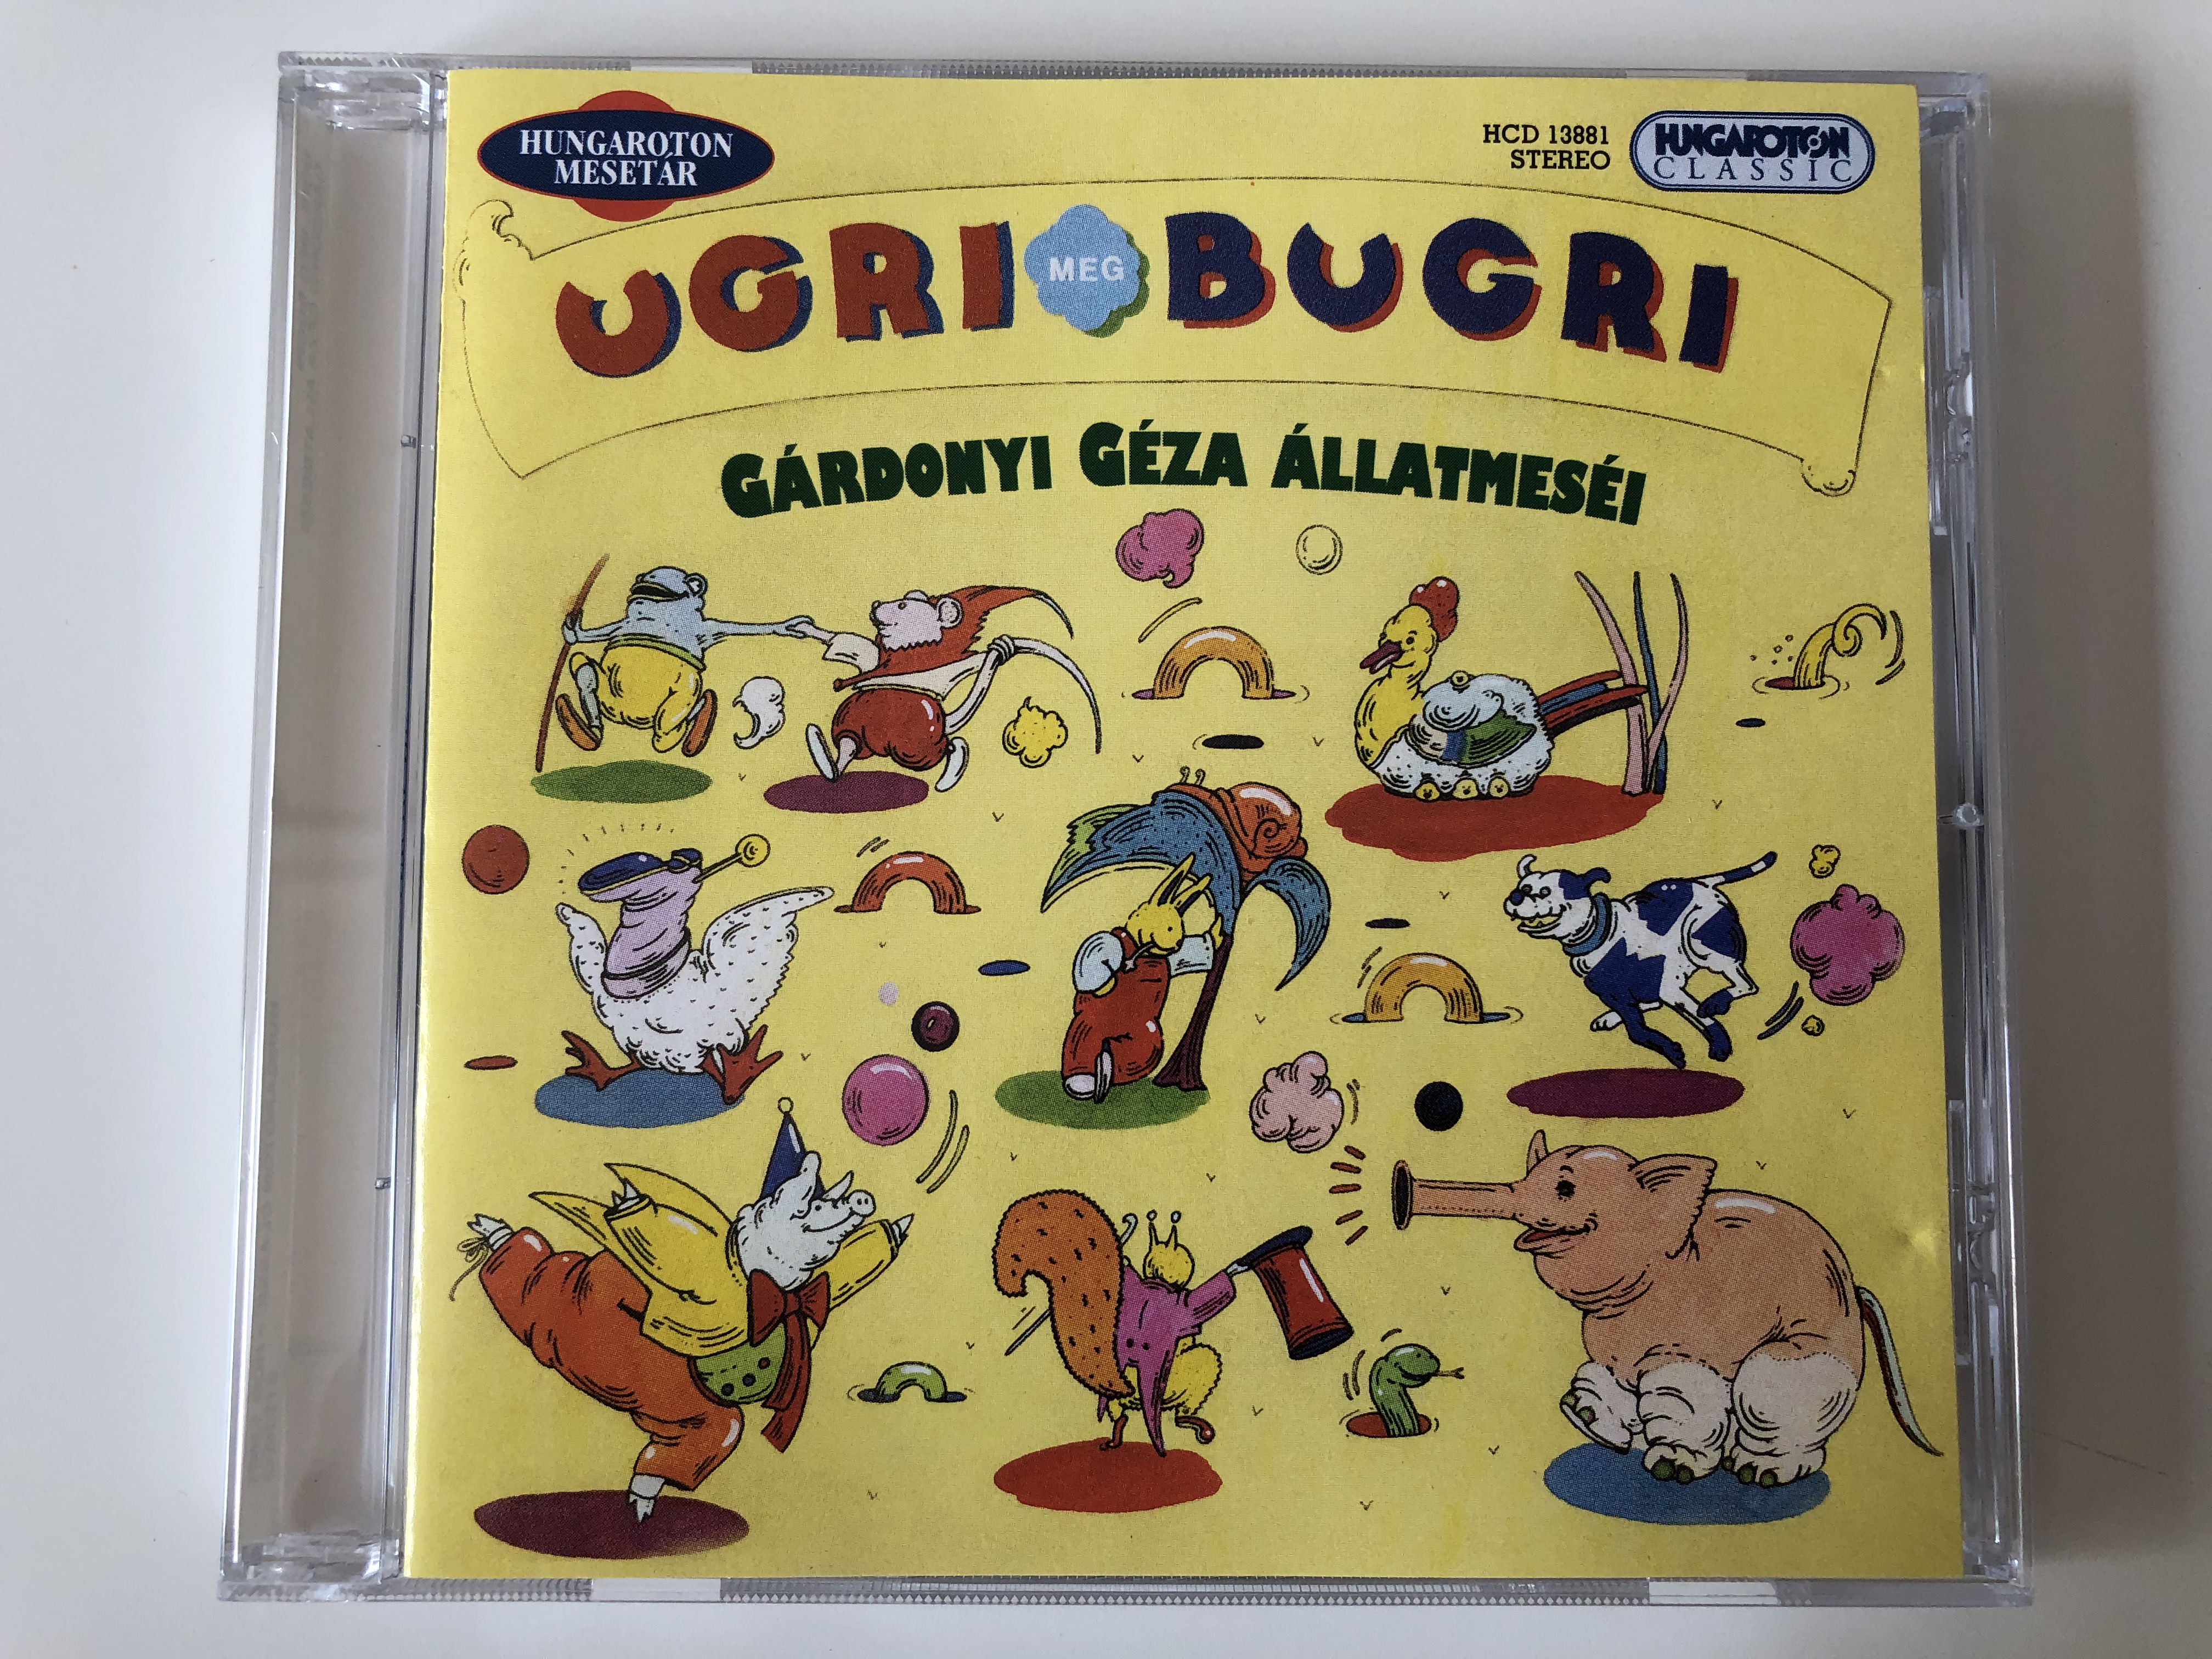 ugri-meg-bugri-g-rdonyi-g-za-llatmes-i-hungaroton-classic-audio-cd-2004-stereo-hcd-13881-1-.jpg